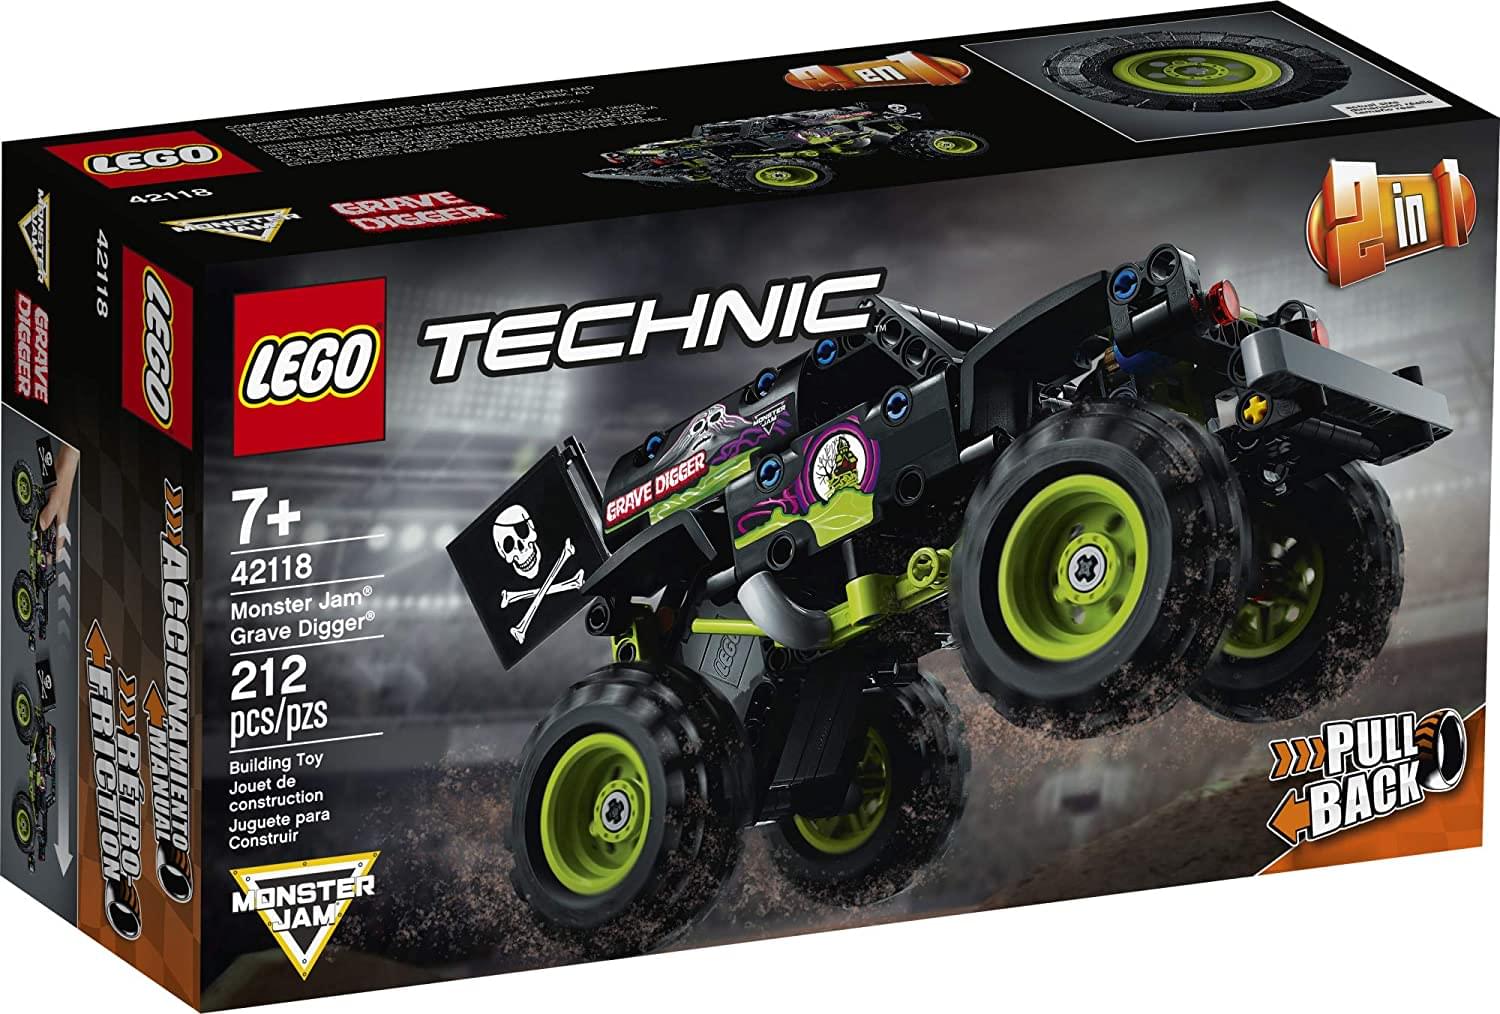 LEGO Technic 42118 Monster Jam Grave Digger 212 Piece Building Kit